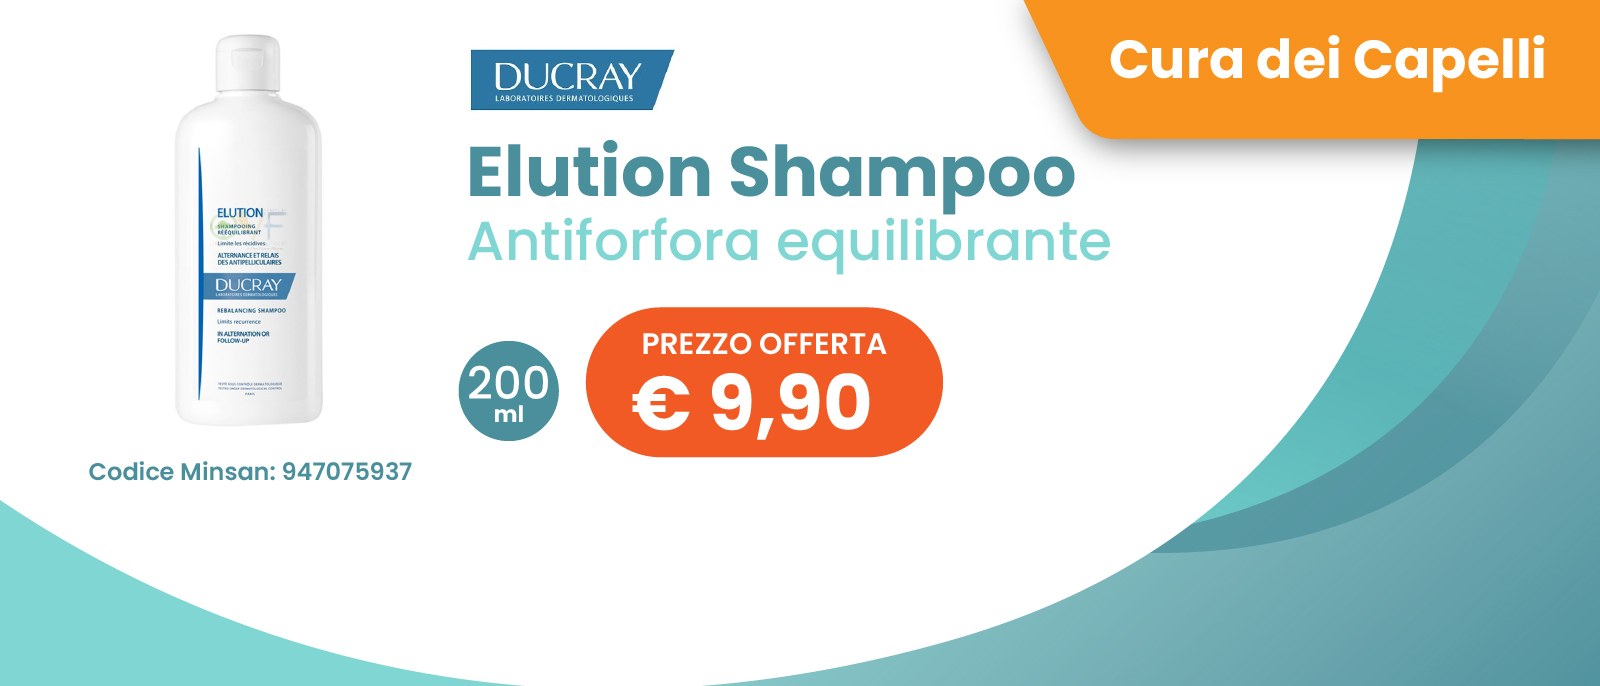 ducray-elution-shampoo